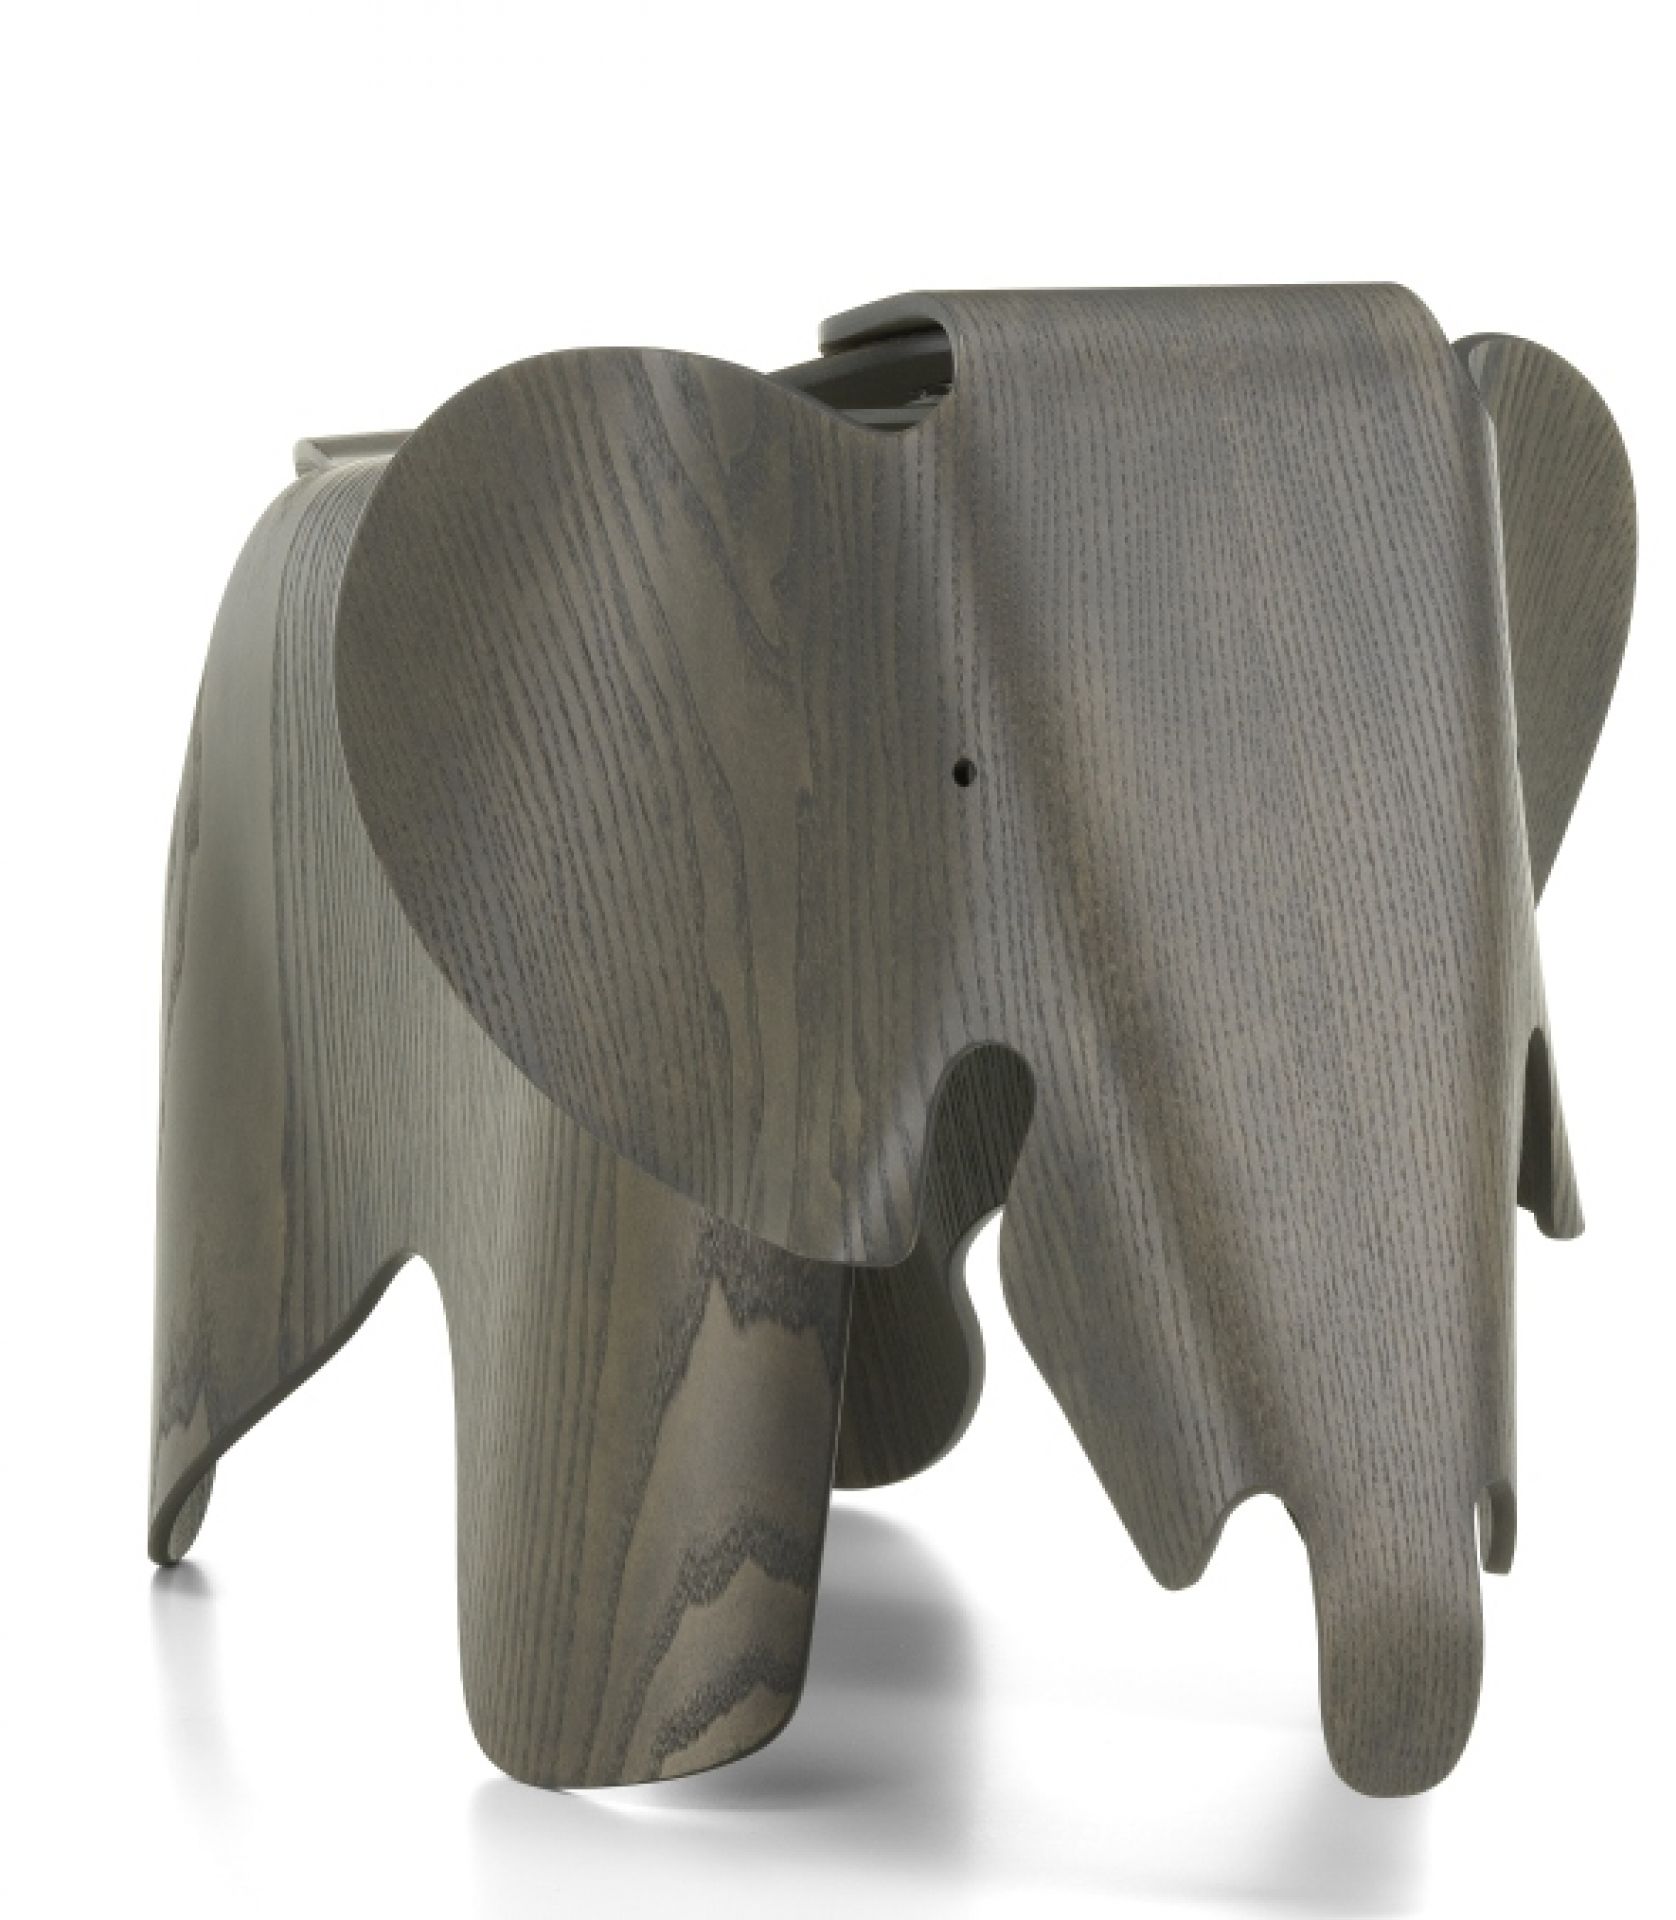 Edition | Hocker Elephant VITRA Eames Vitra Anniversary 75th EDITION 21022505 LIMITED Plywood Group